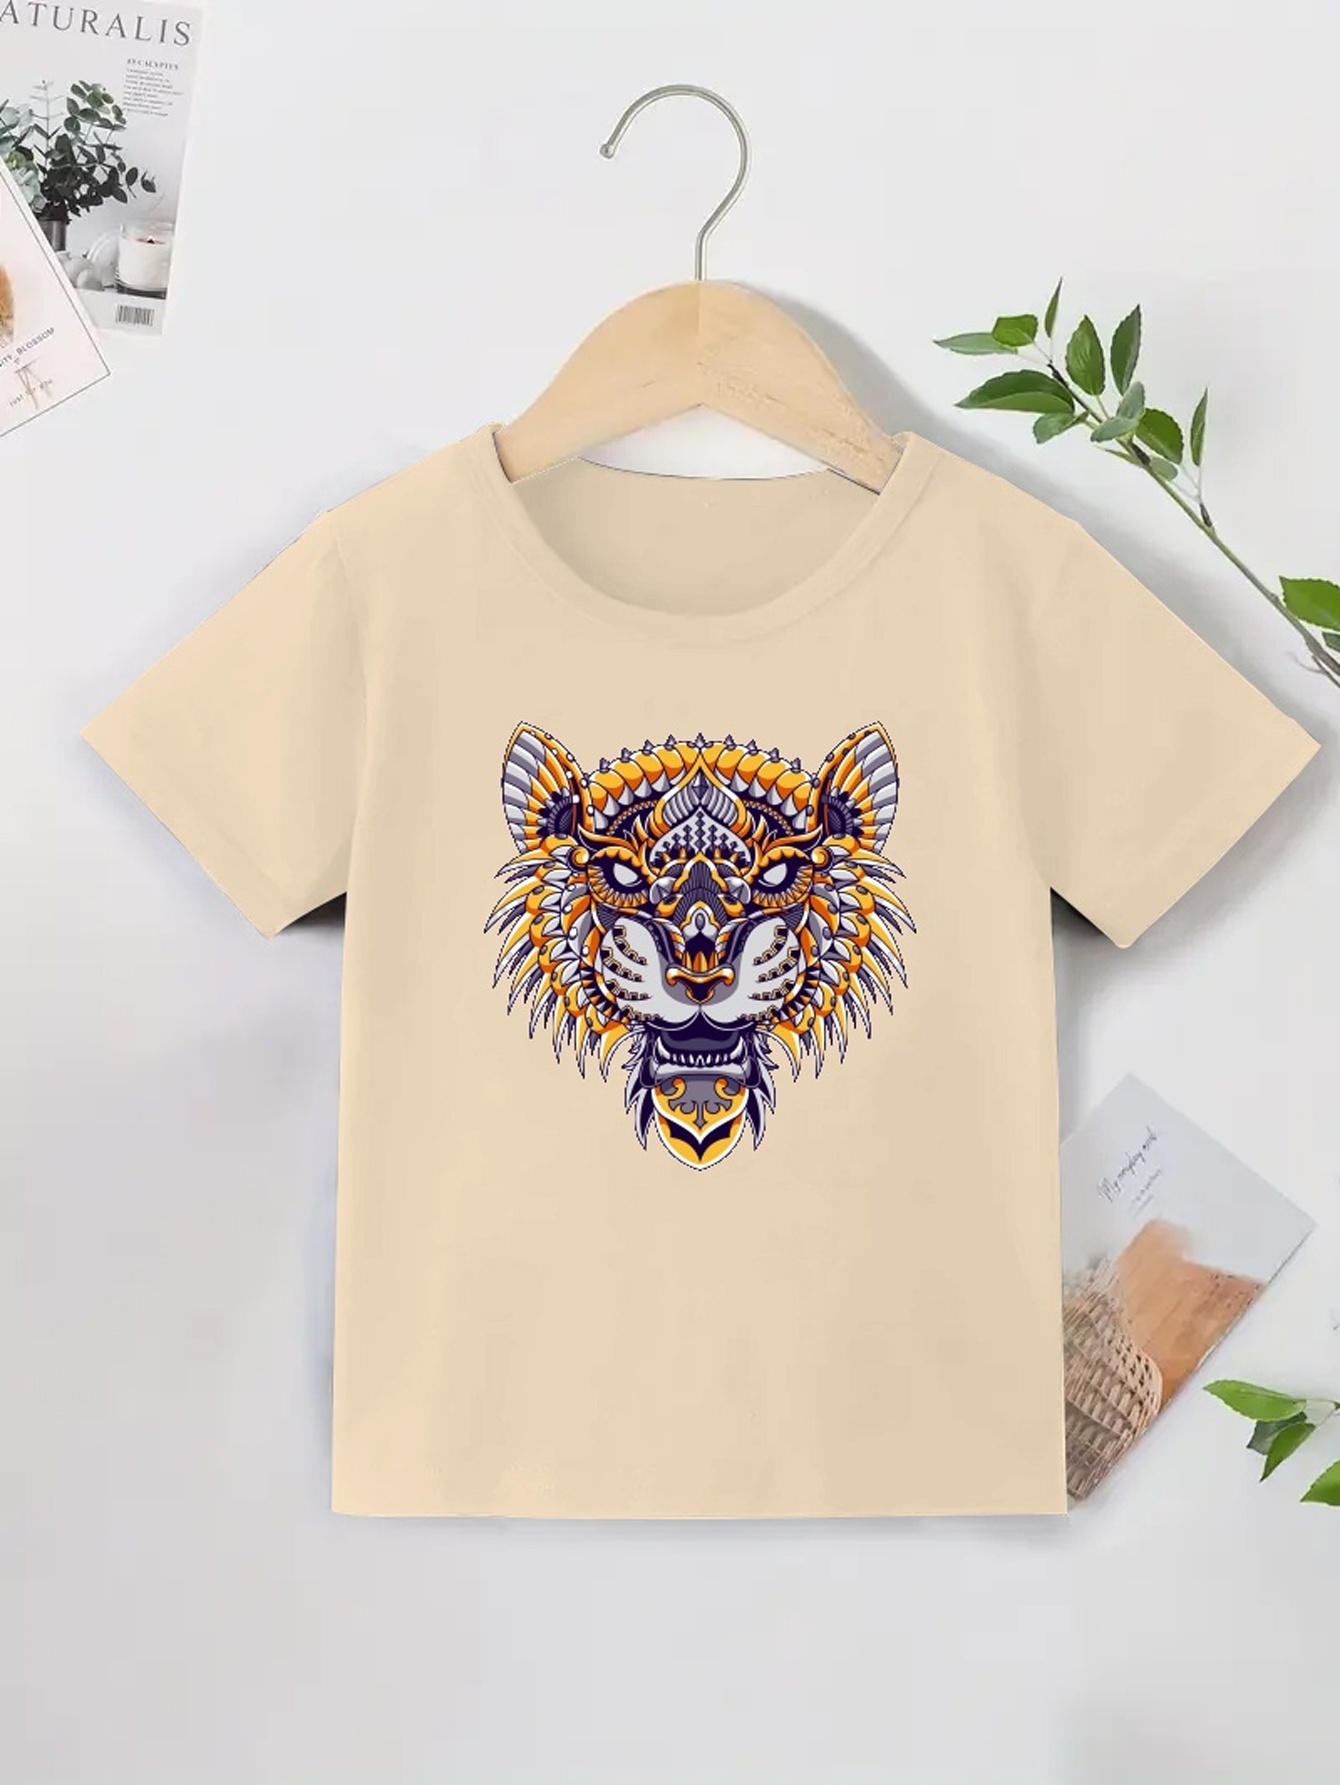 Tiger Print Clothes Kids, Girls Tiger Print Shirt